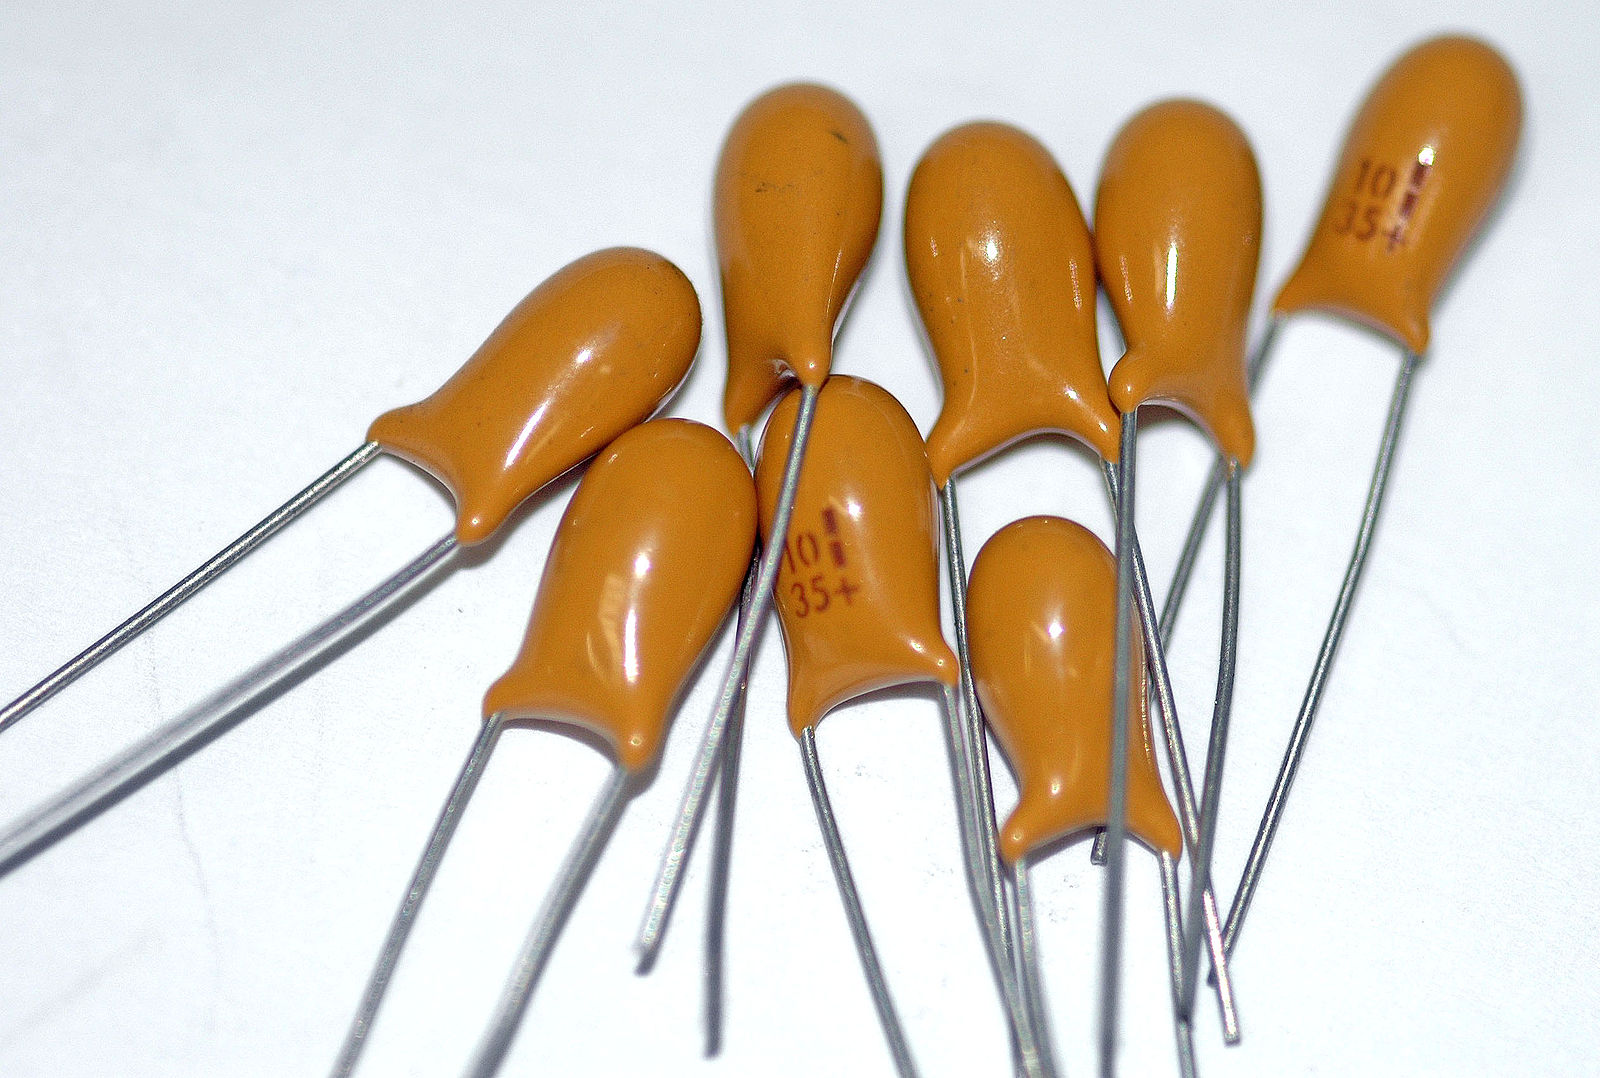 X-rated Tantalum capacitors